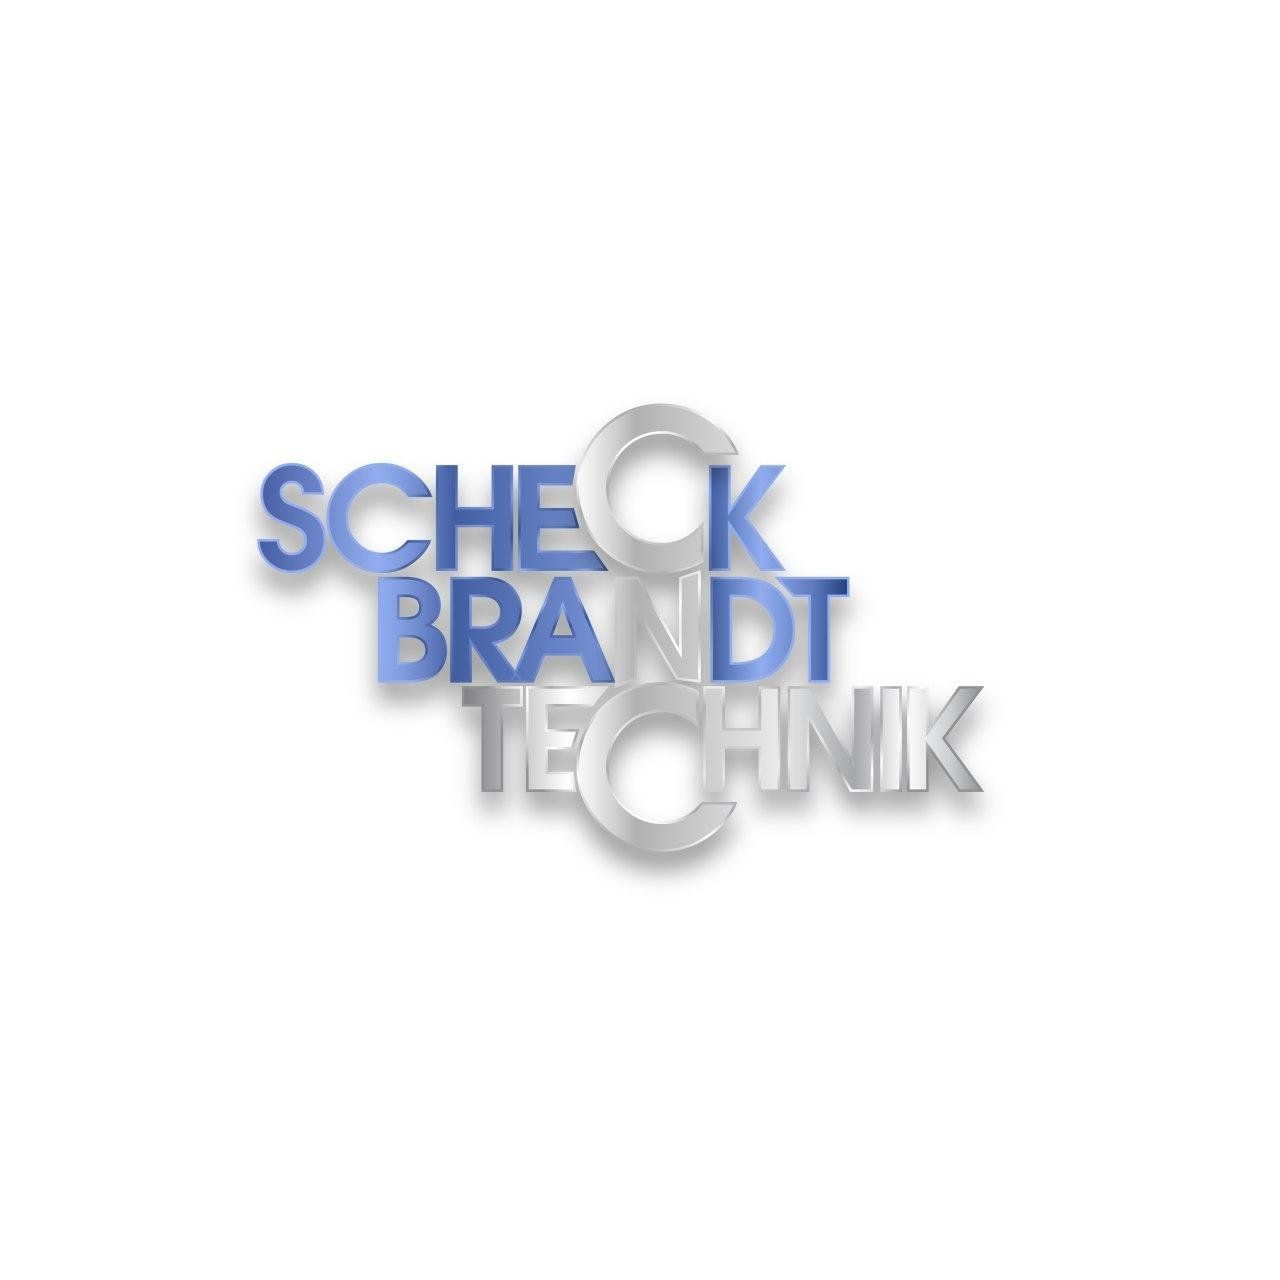 (c) Scheck-brandt.com